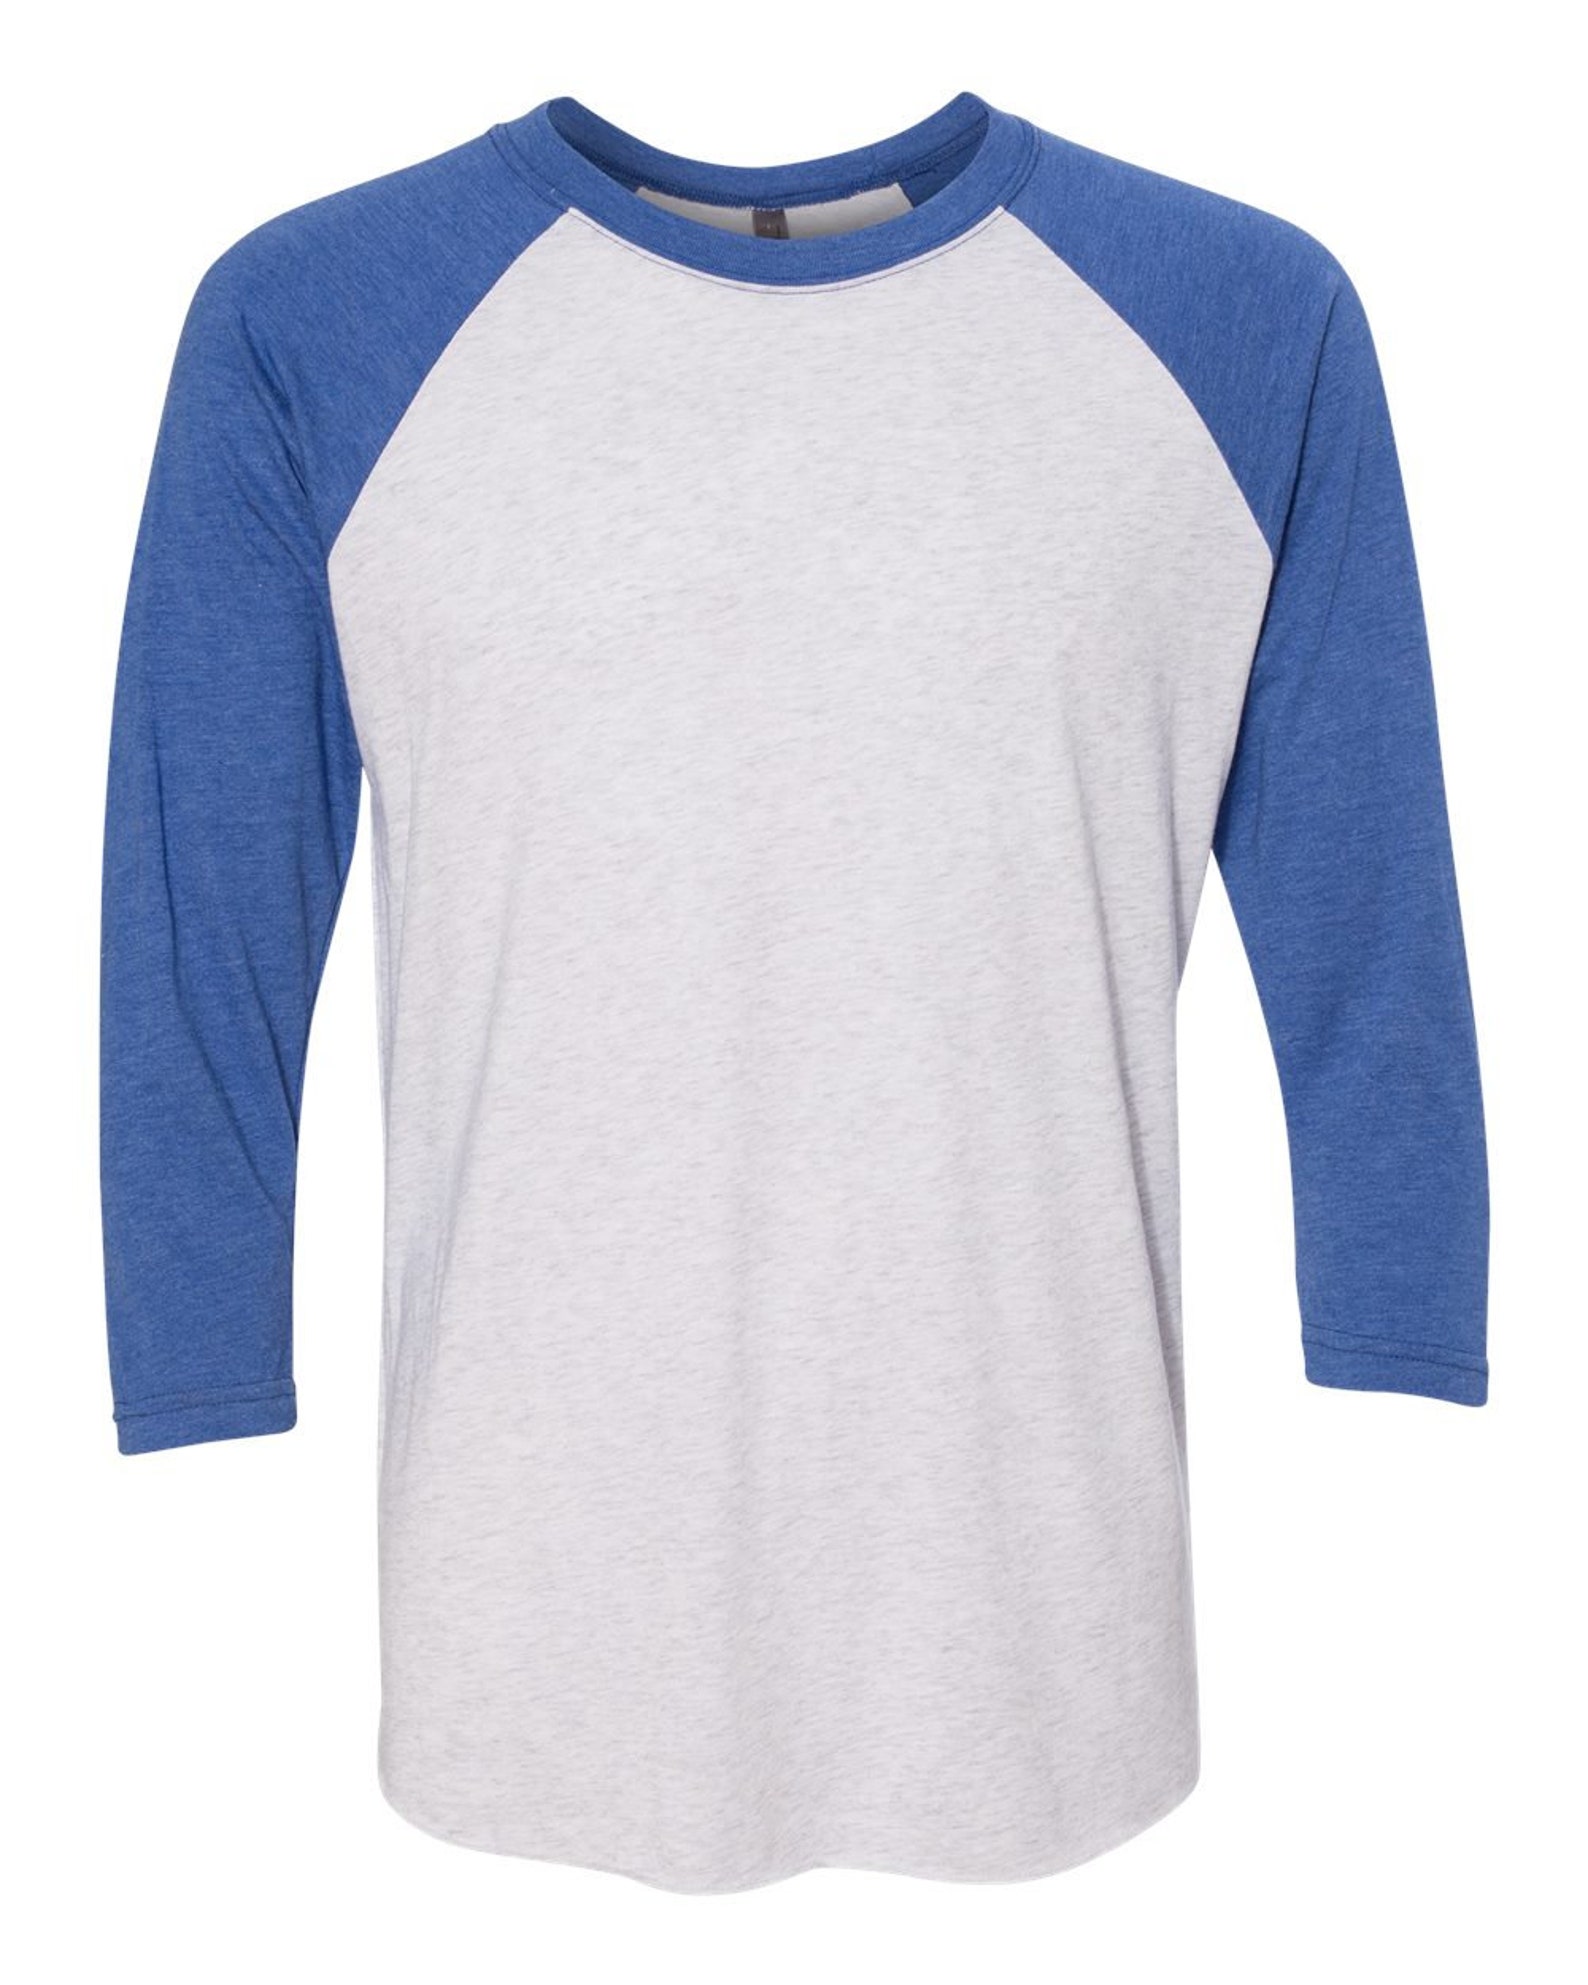 Adult Raglan Shirts Blank Raglan Shirts Unisex Raglan Plain | Etsy